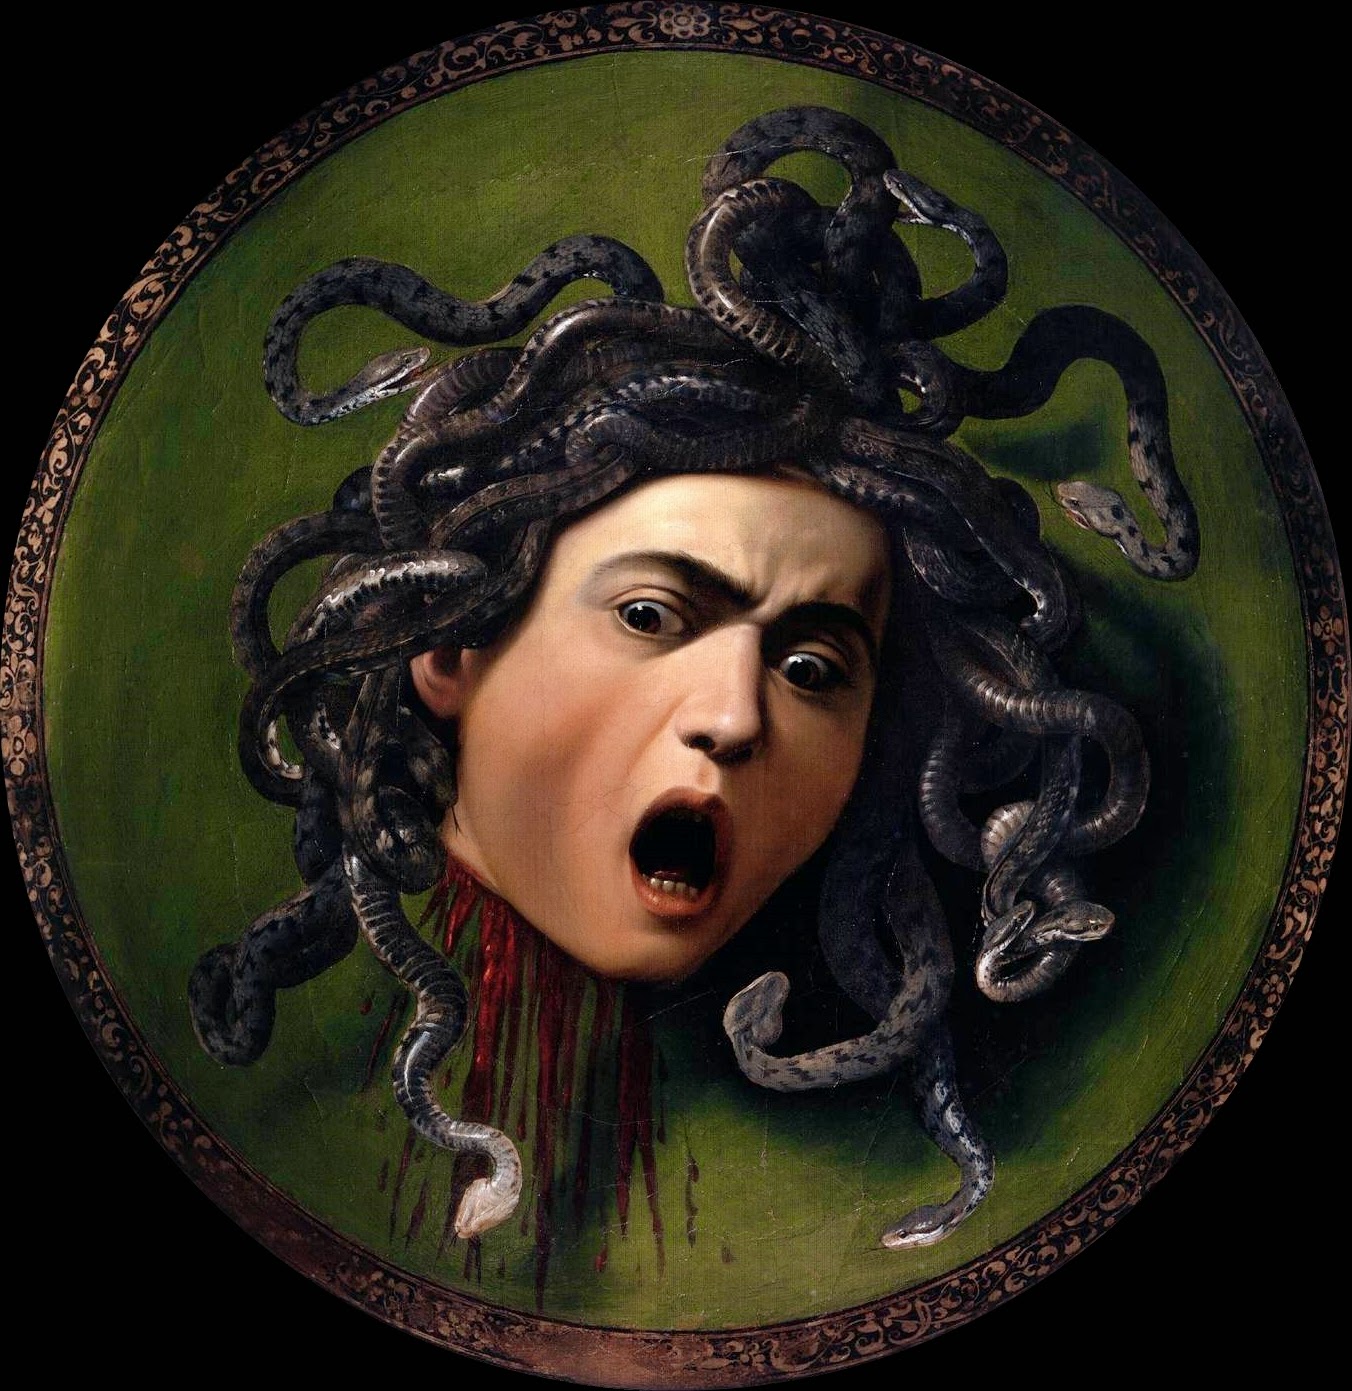 Caravaggio-1571-1610 (149).jpg